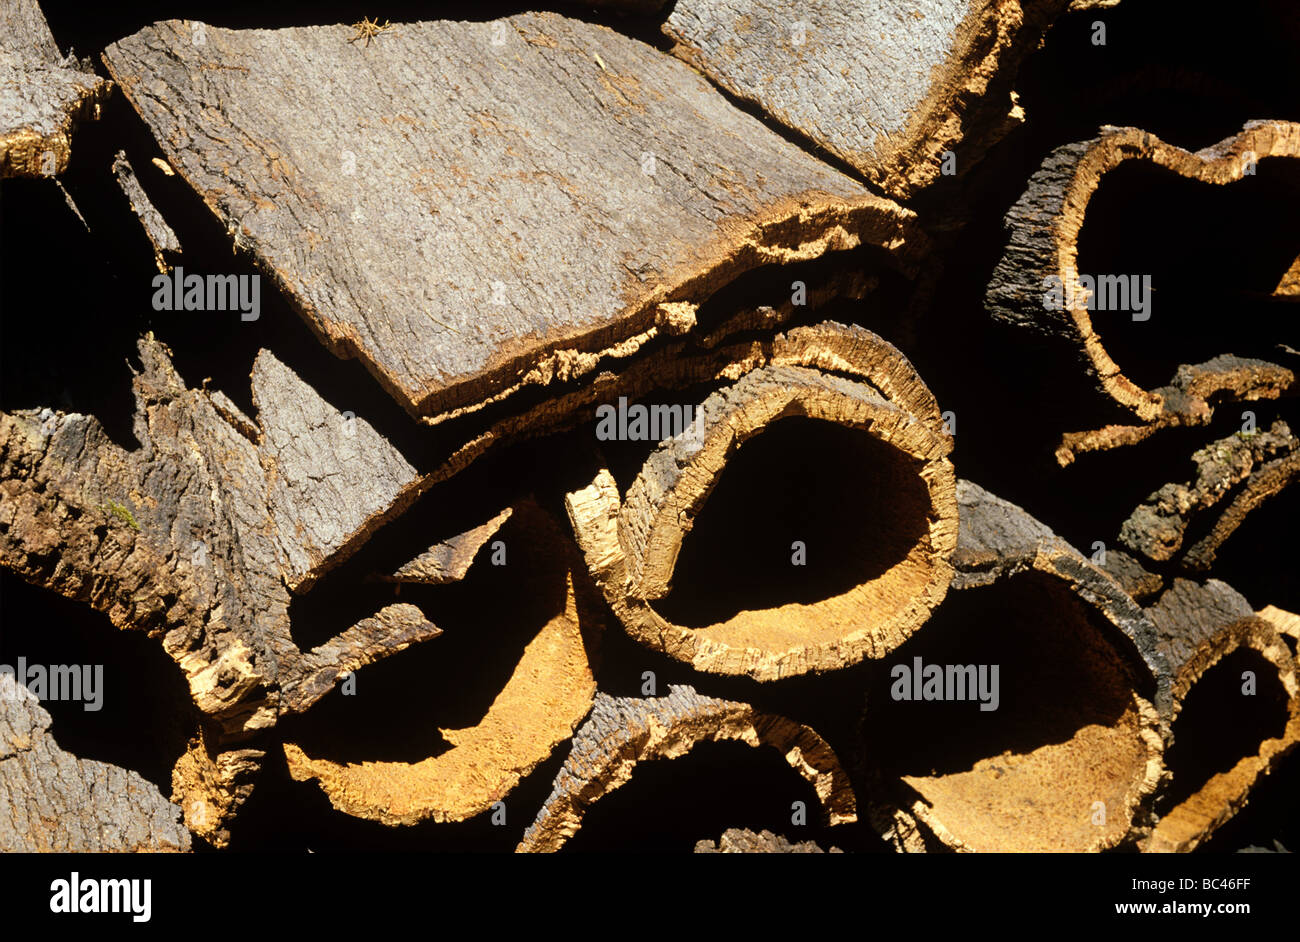 Cork oak Quercus suber harvested bark for making corks Stock Photo